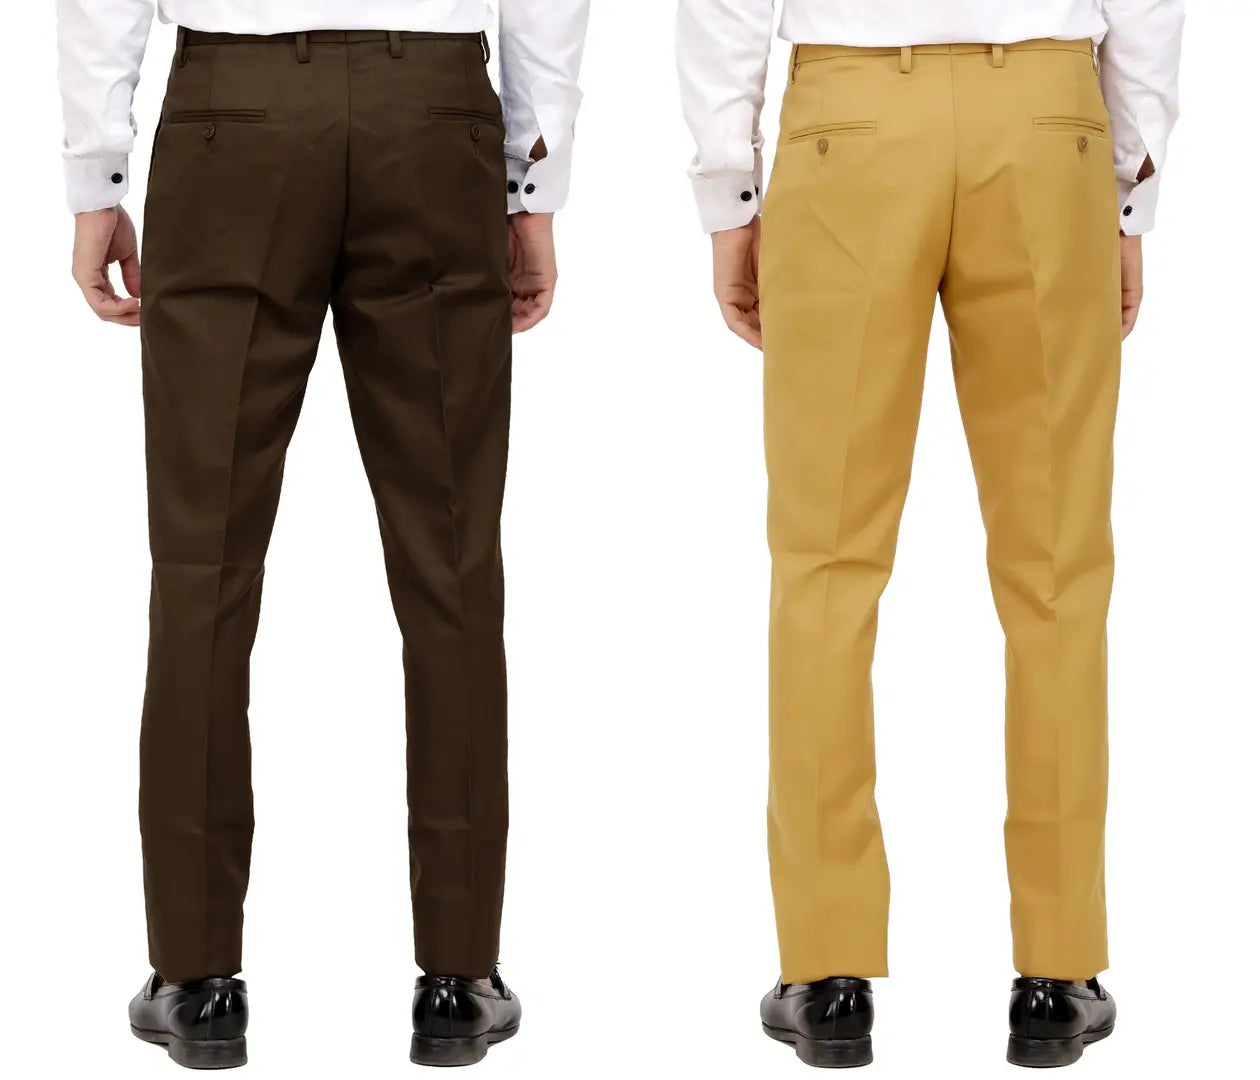 Kundan Men Poly-Viscose Blended Dark Brown and Khaki Formal Trousers ( Pack of 2 Trousers )